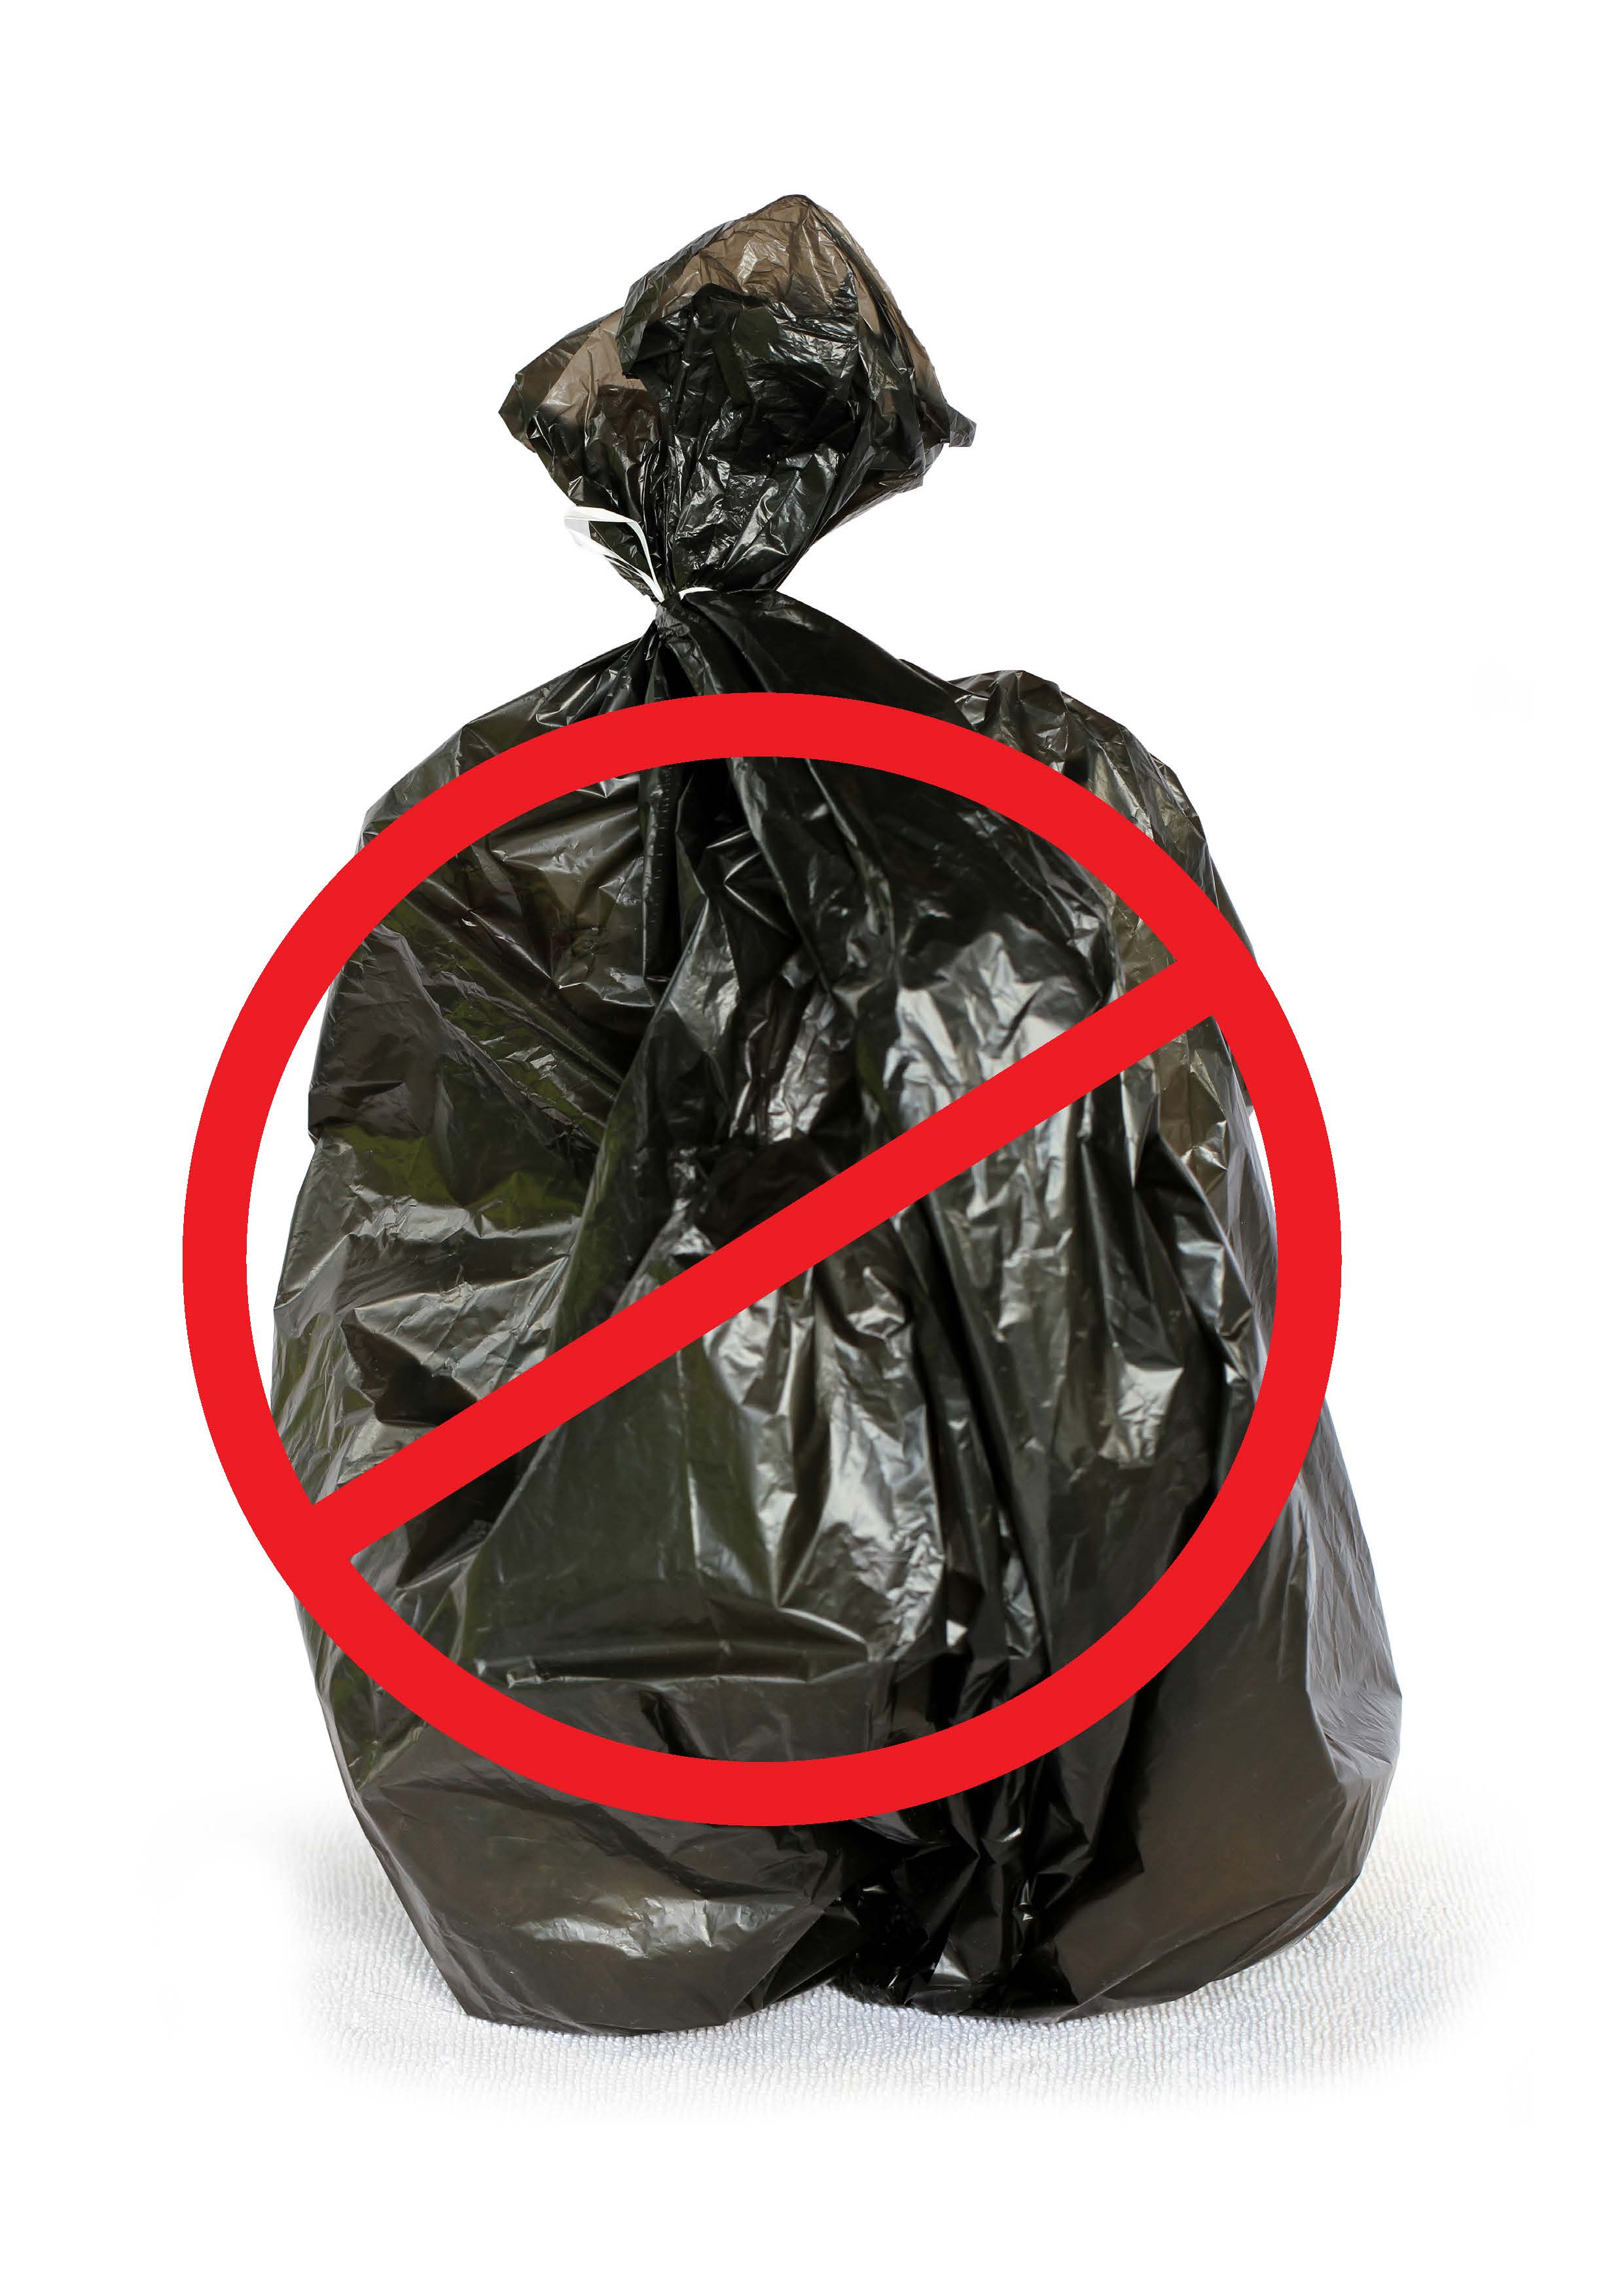 Black Trash Bag - Community Waste Disposal